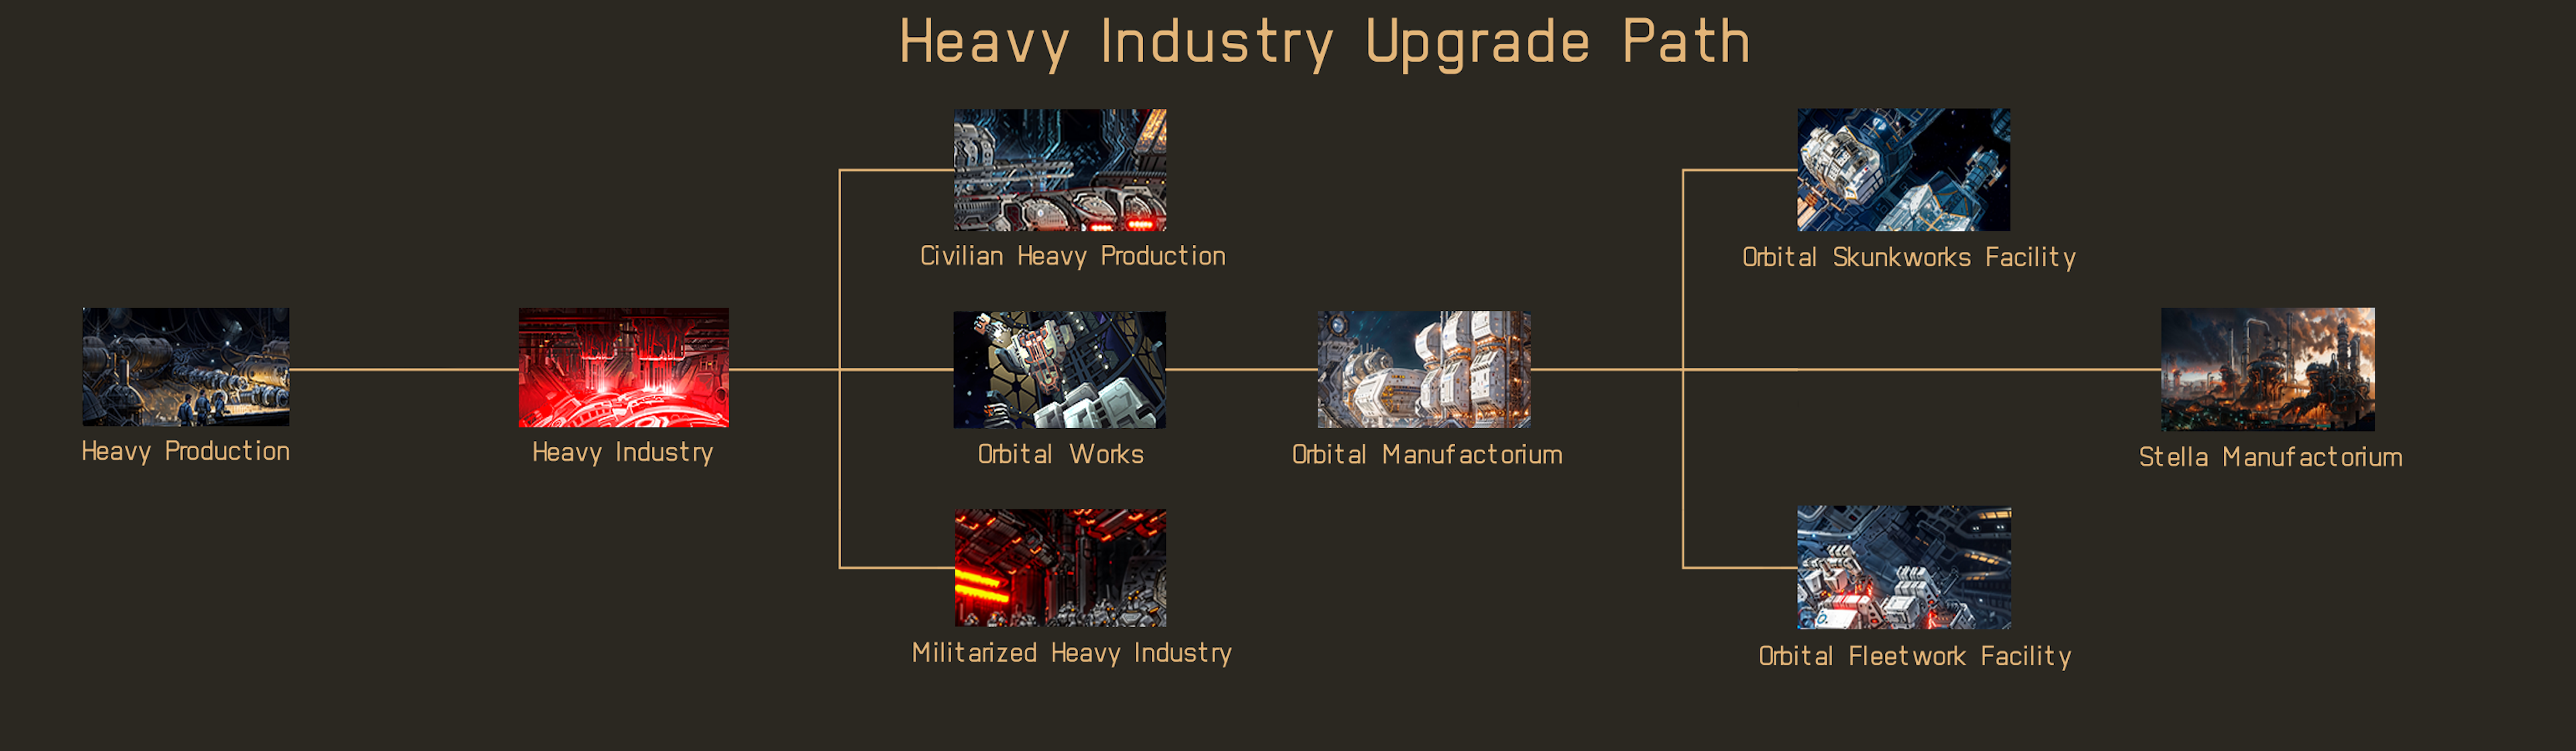 Heavy Industry Upgrade Path